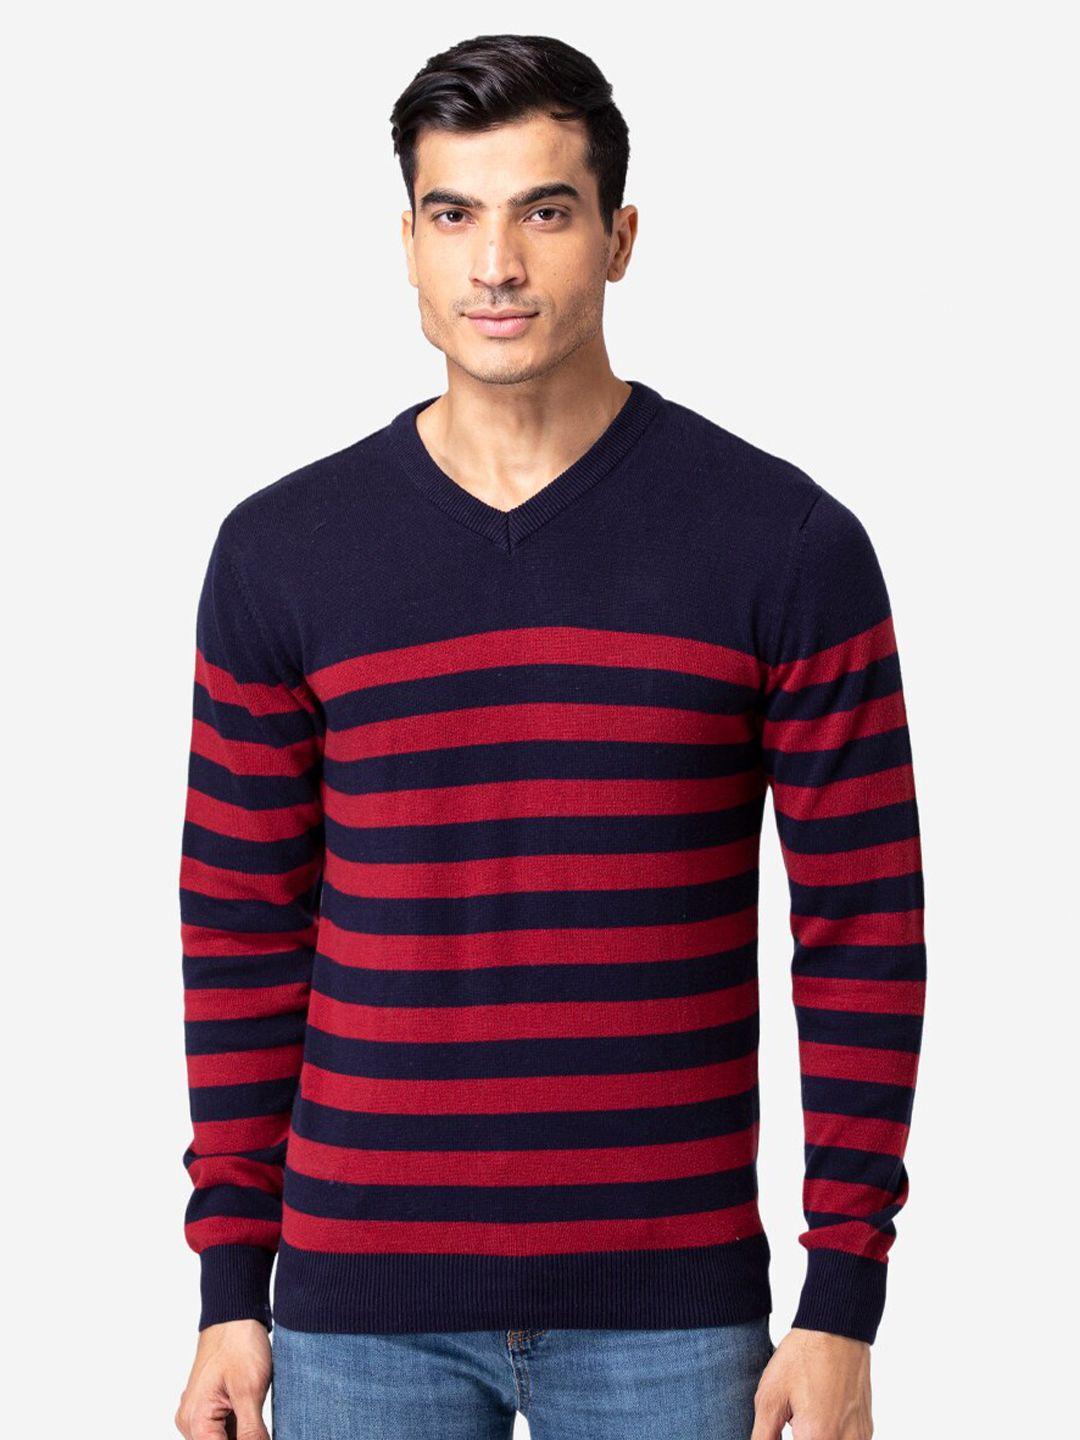 allen-cooper-men-navy-blue-&-maroon-striped-pullover